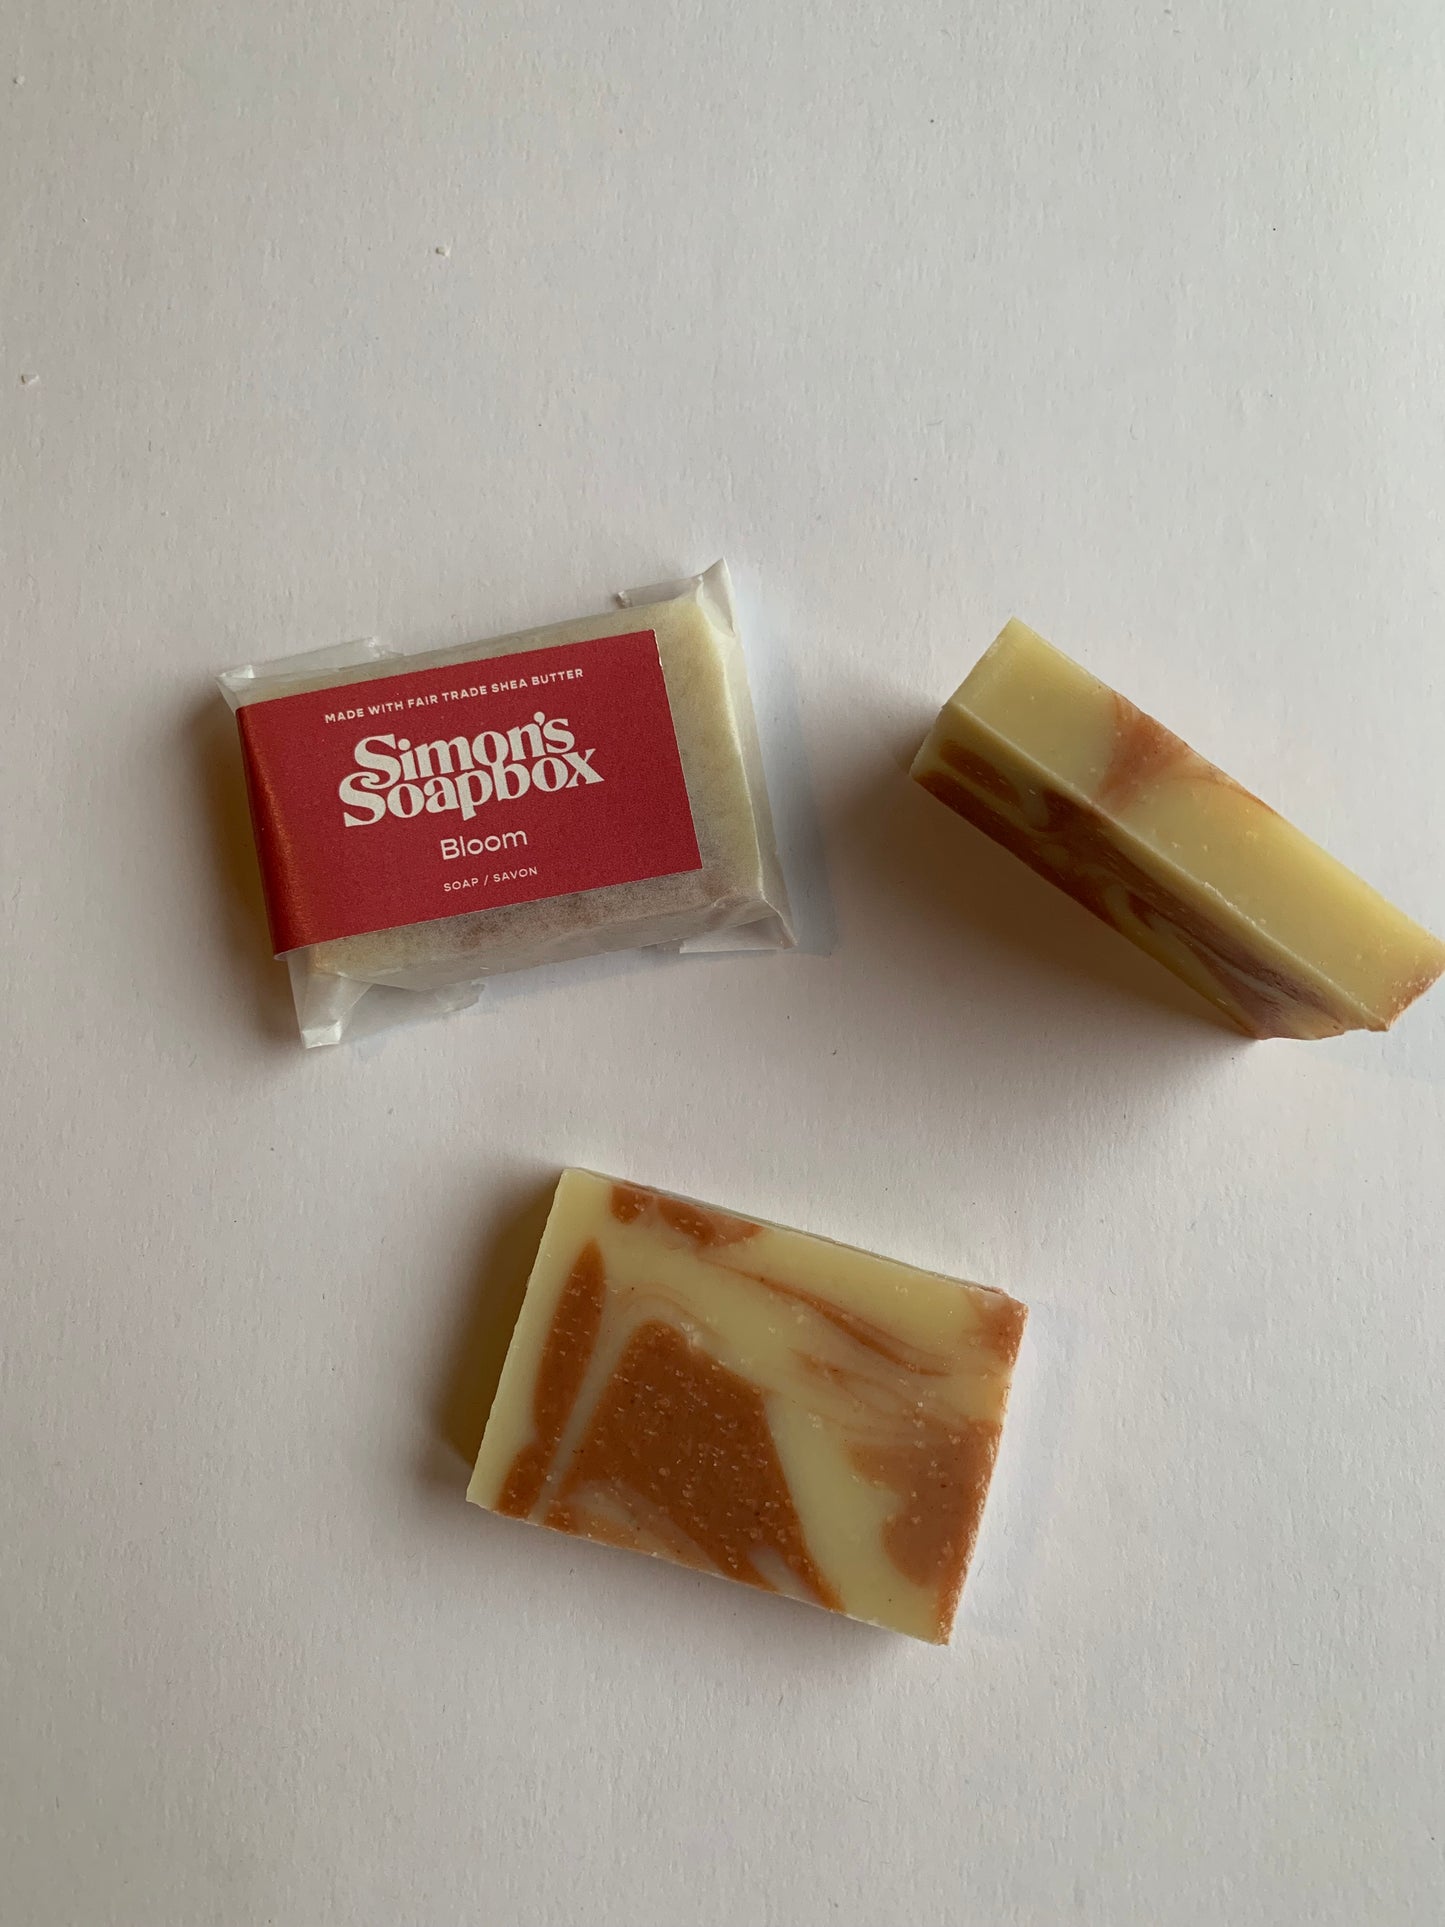 Mini bar of soap (hotel size)